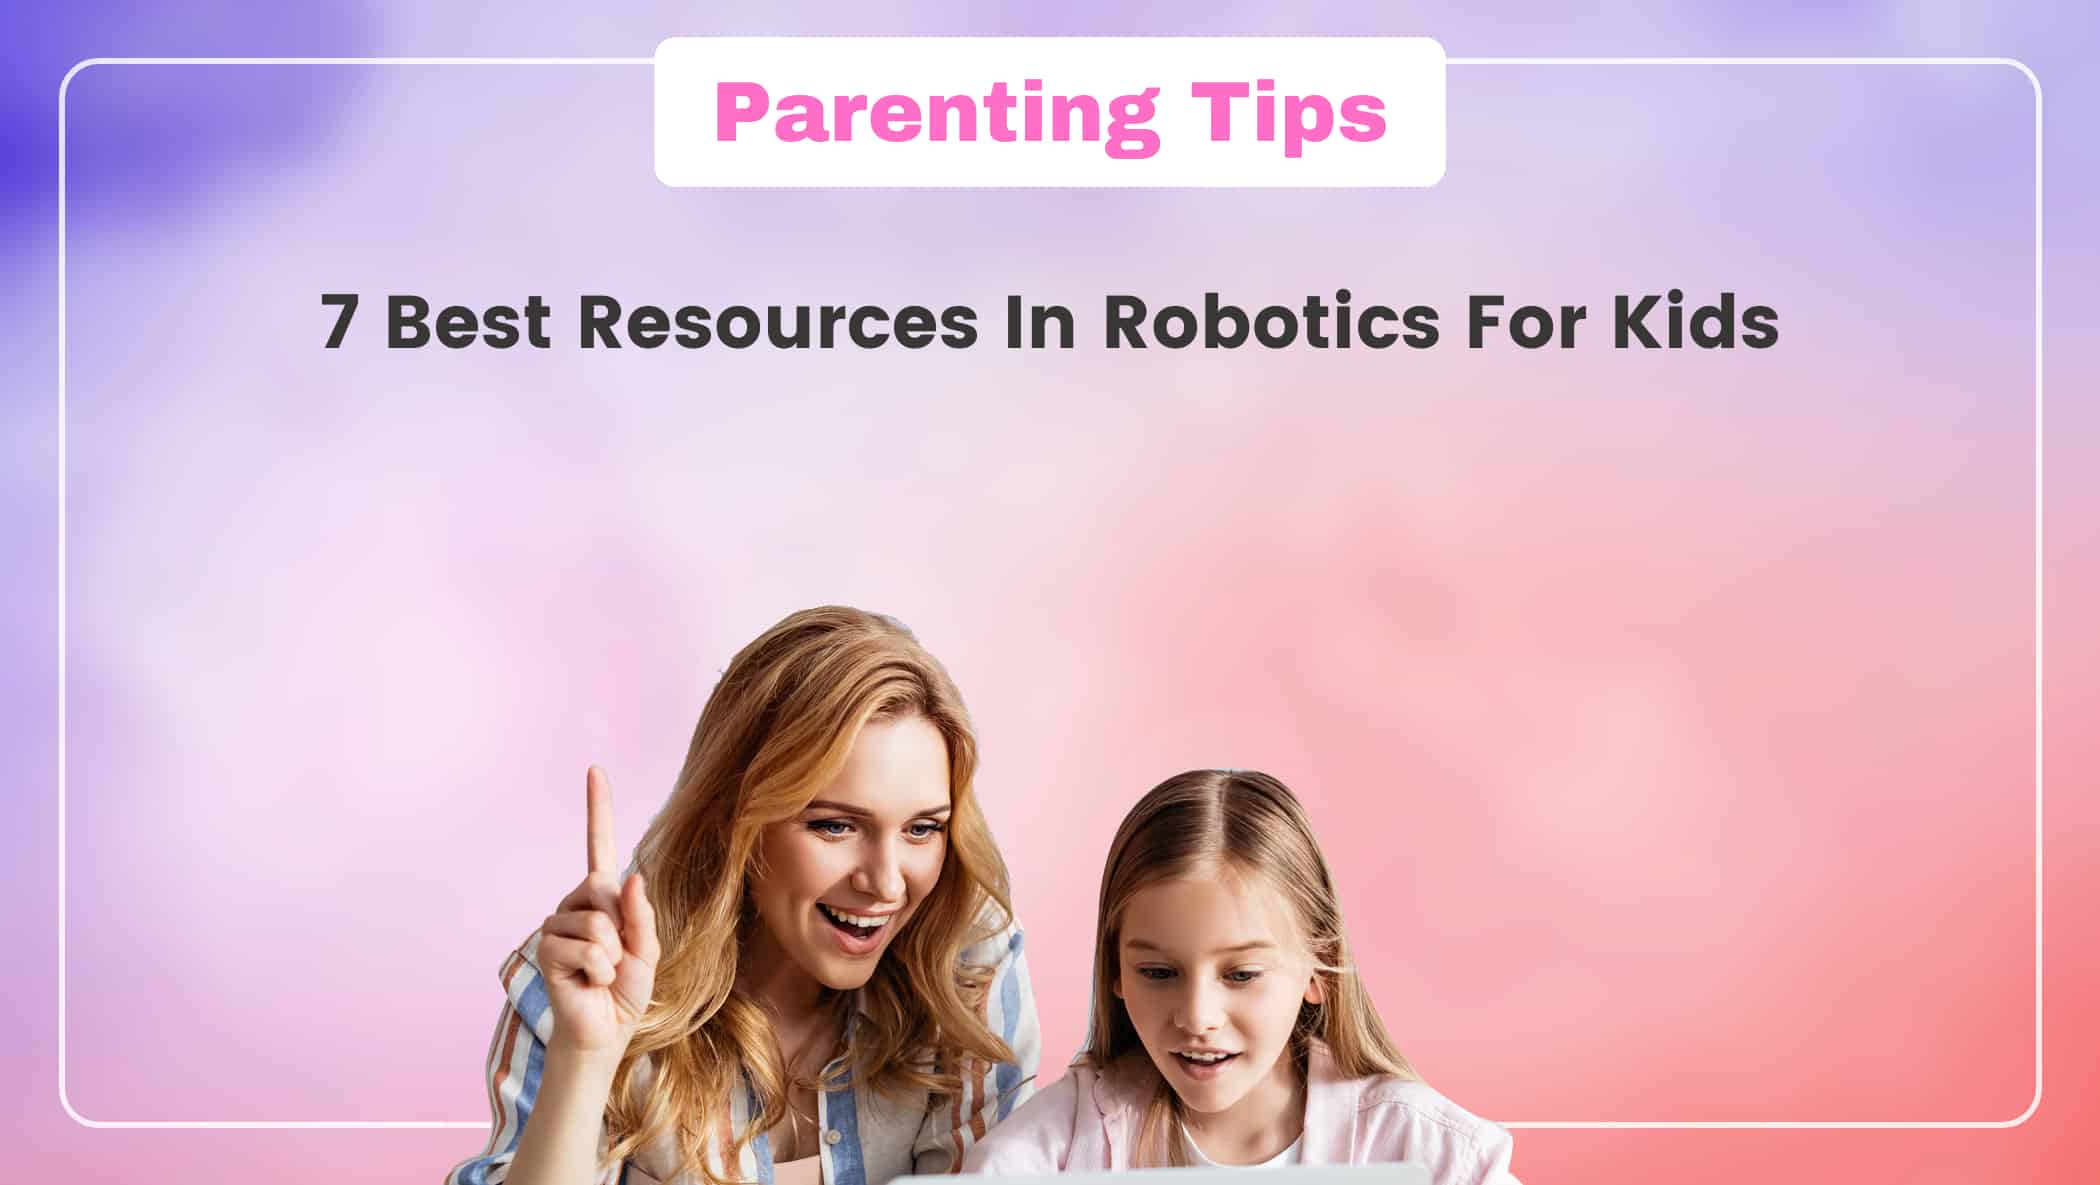 7 Best Resources In Robotics For Kids Image